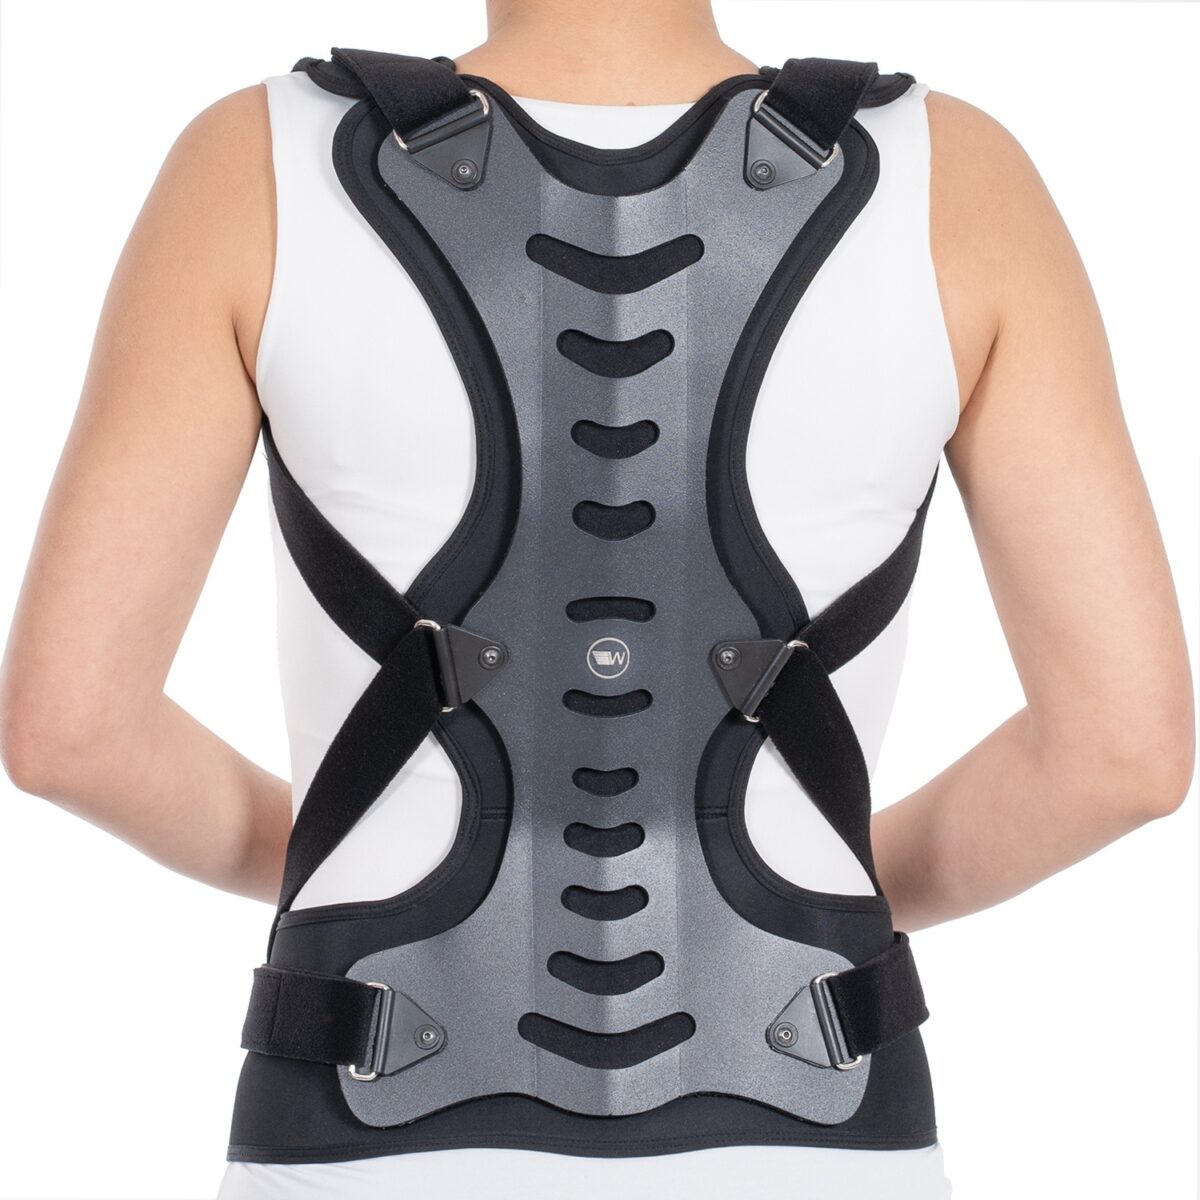 wingmed orthopedic equipments W444 spinal corset 45